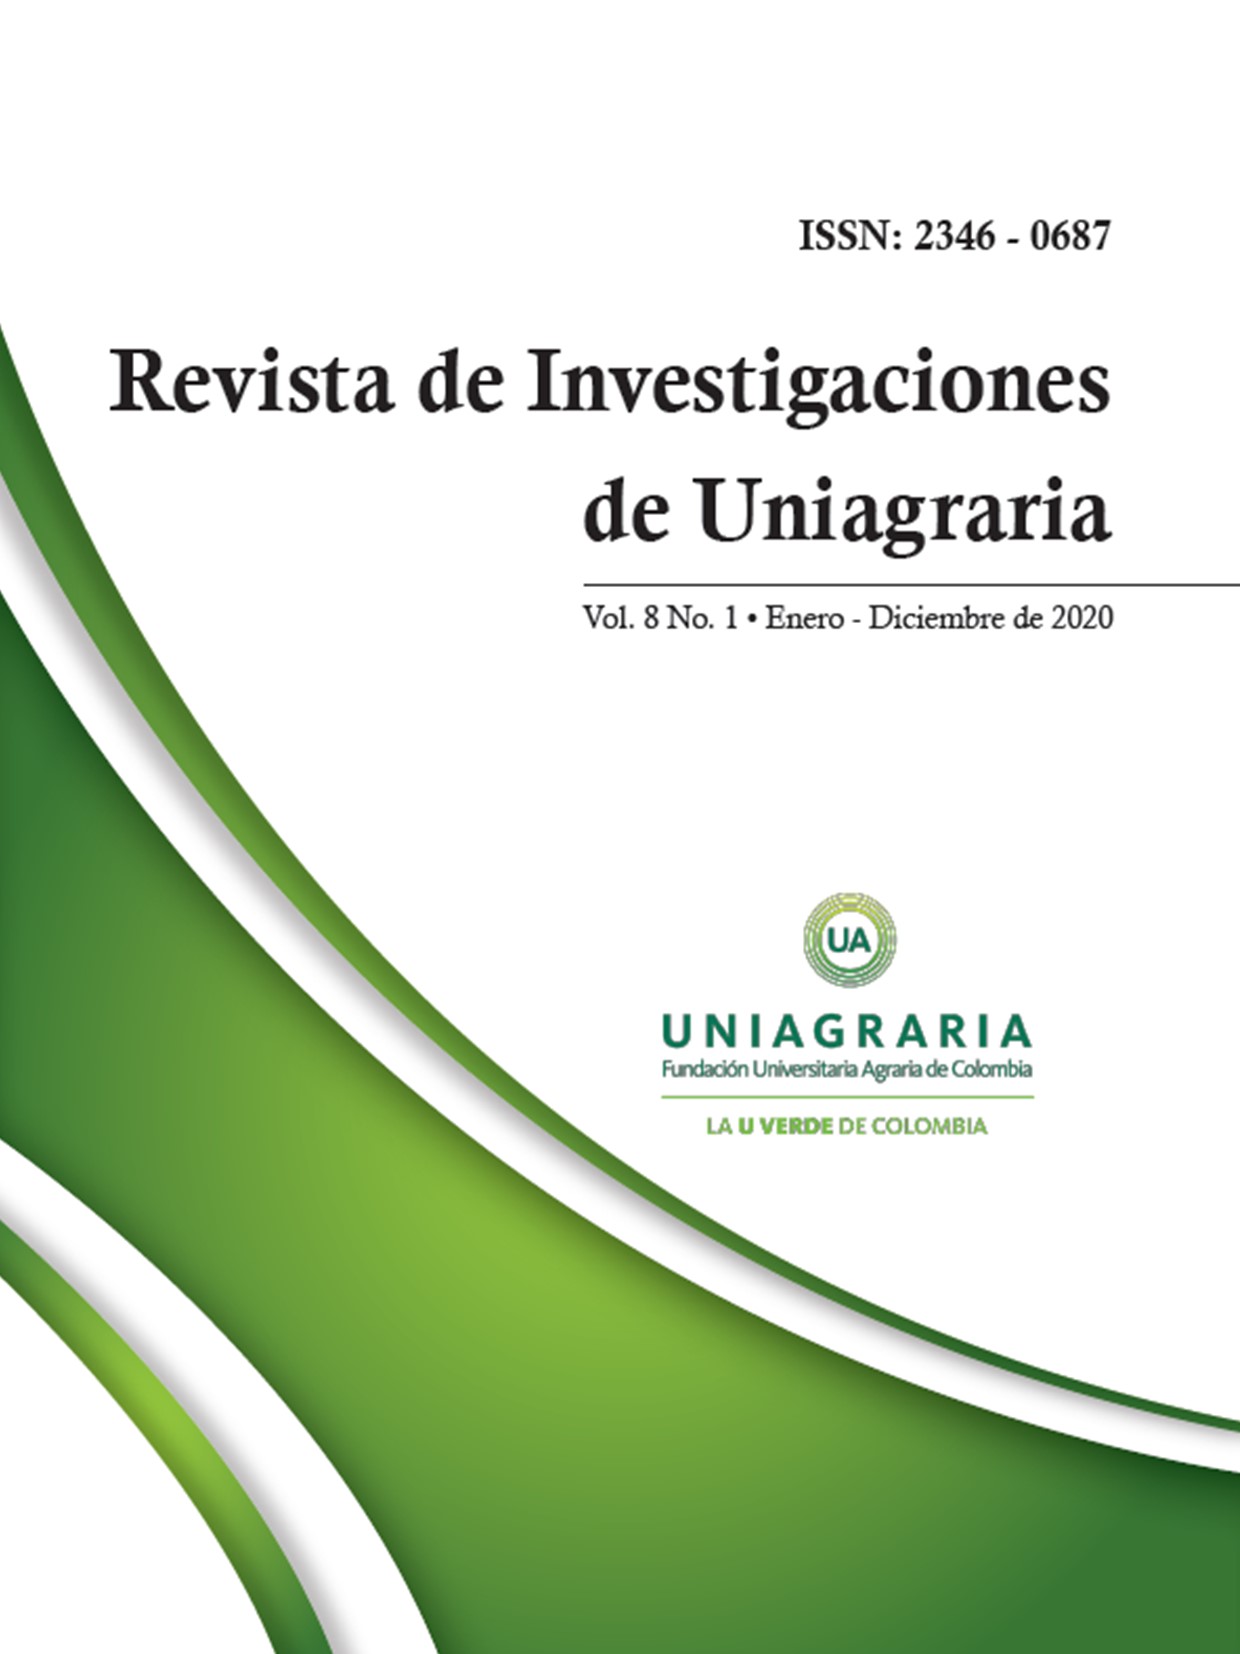 REVISTA DE INVESTIGACIONES DE UNIAGRARIA Vol. 8 Enero-diciembre 2020